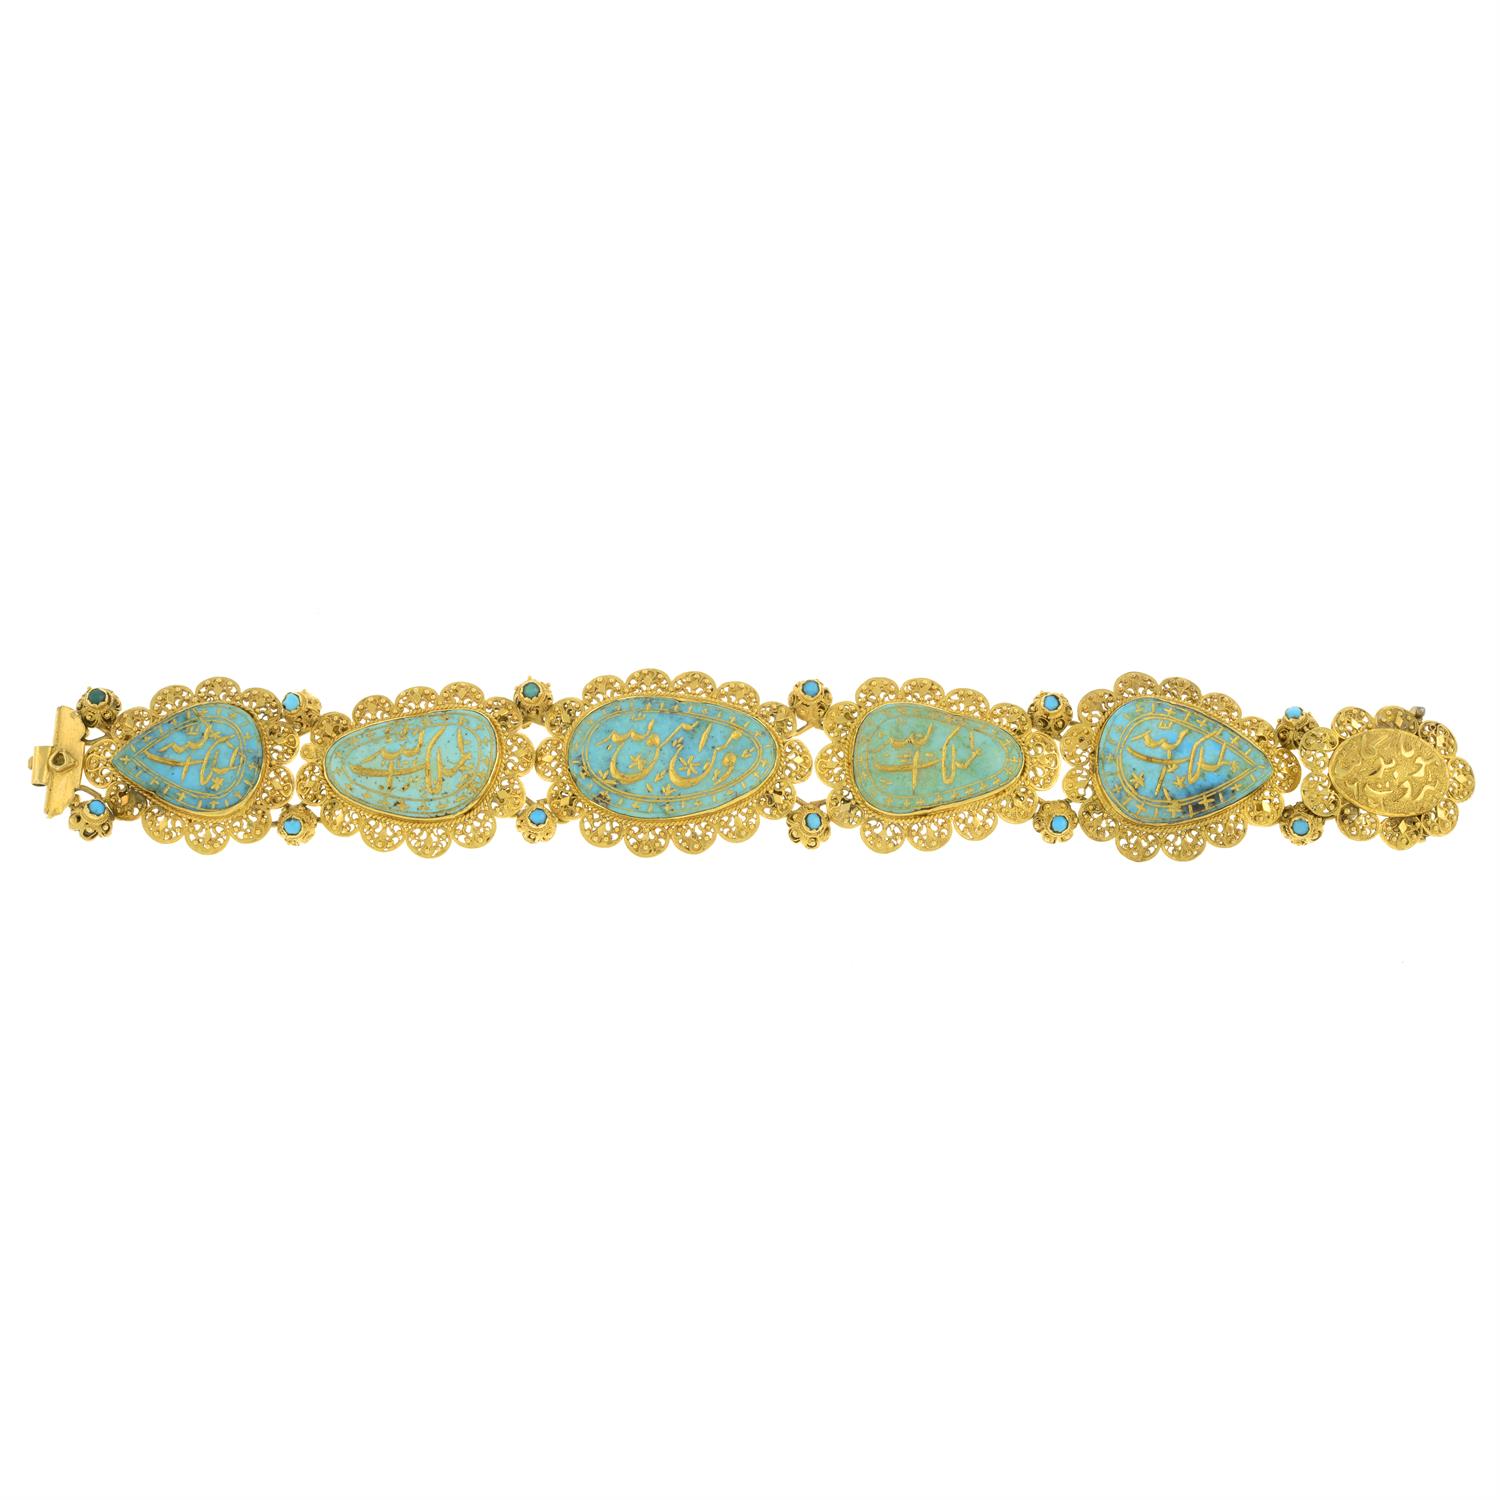 Carved turquoise bracelet - Image 2 of 5